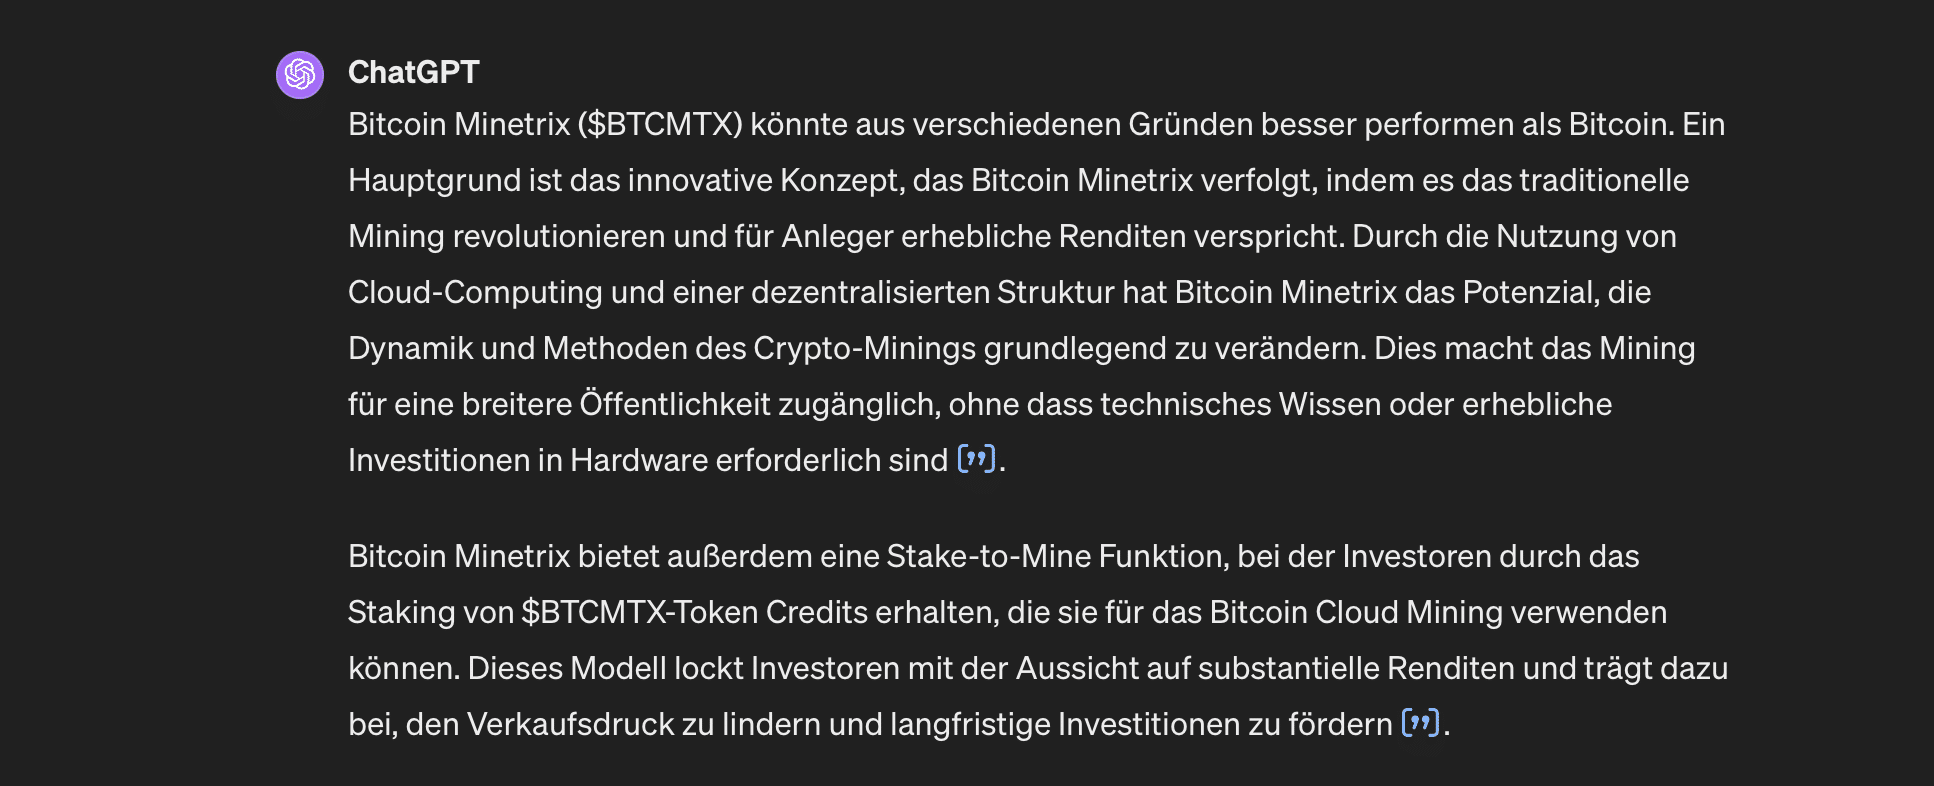 chatgpt über bitcoin minetrix